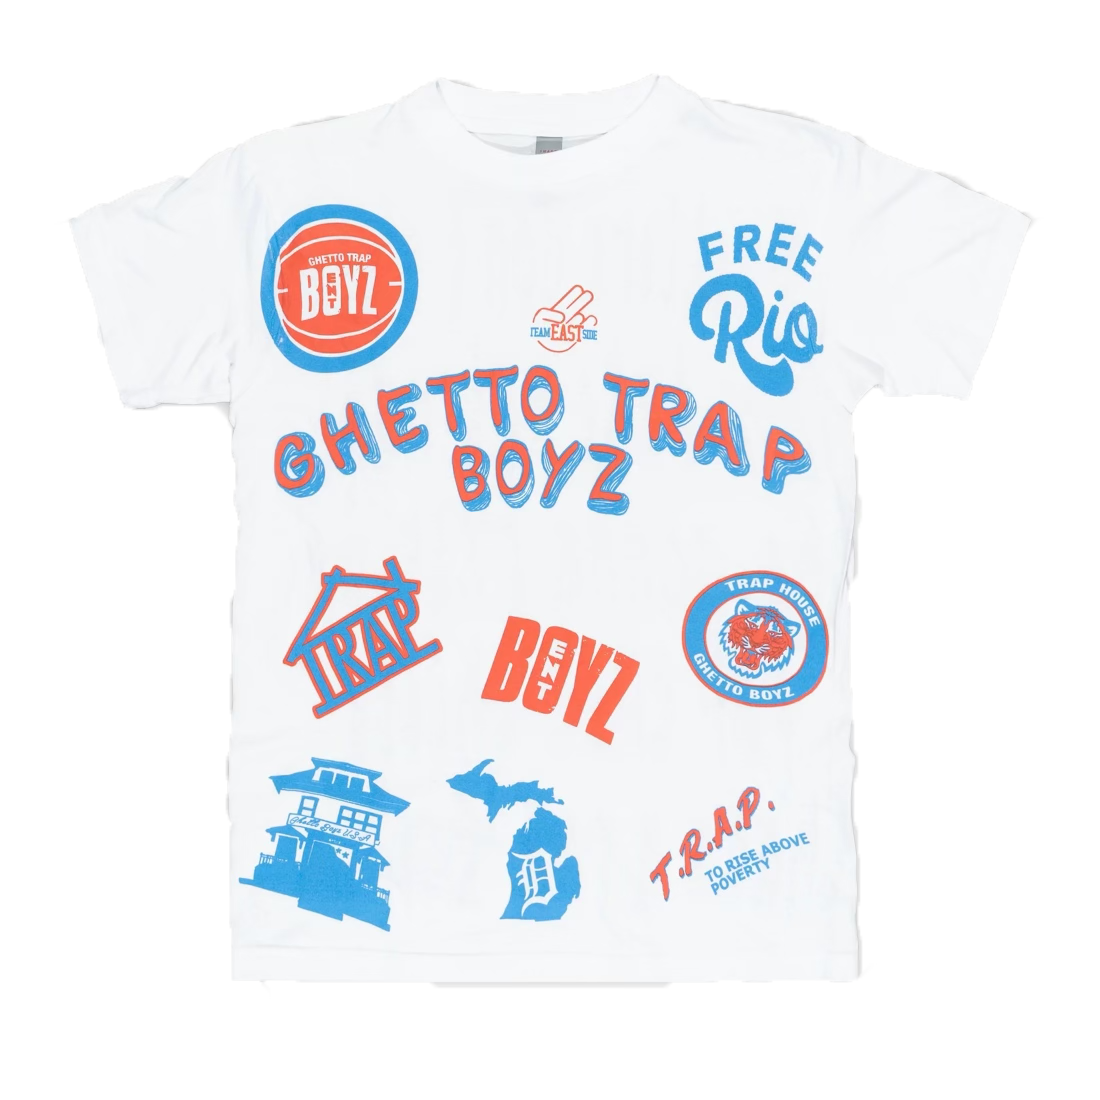 PEEZY X TRAPHOUSE "GHETTO TRAP BOYZ" T-shirt